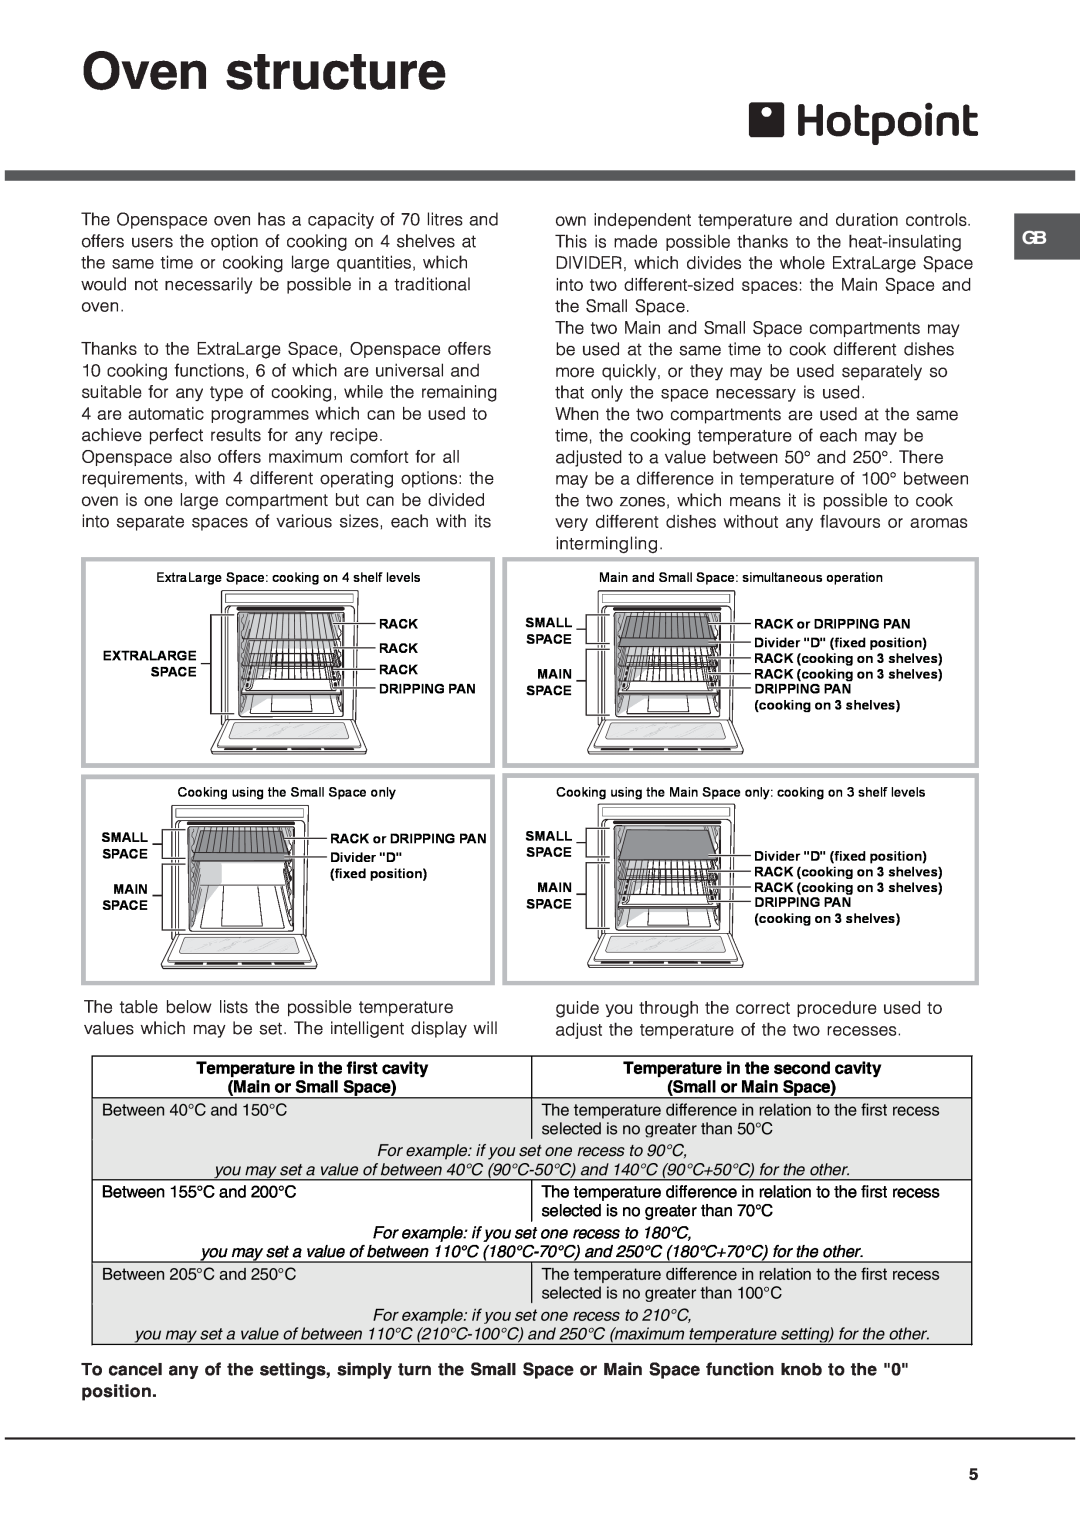 Hotpoint OS 897D IX/HP, OS 897D C IX/HP manual Oven structure 